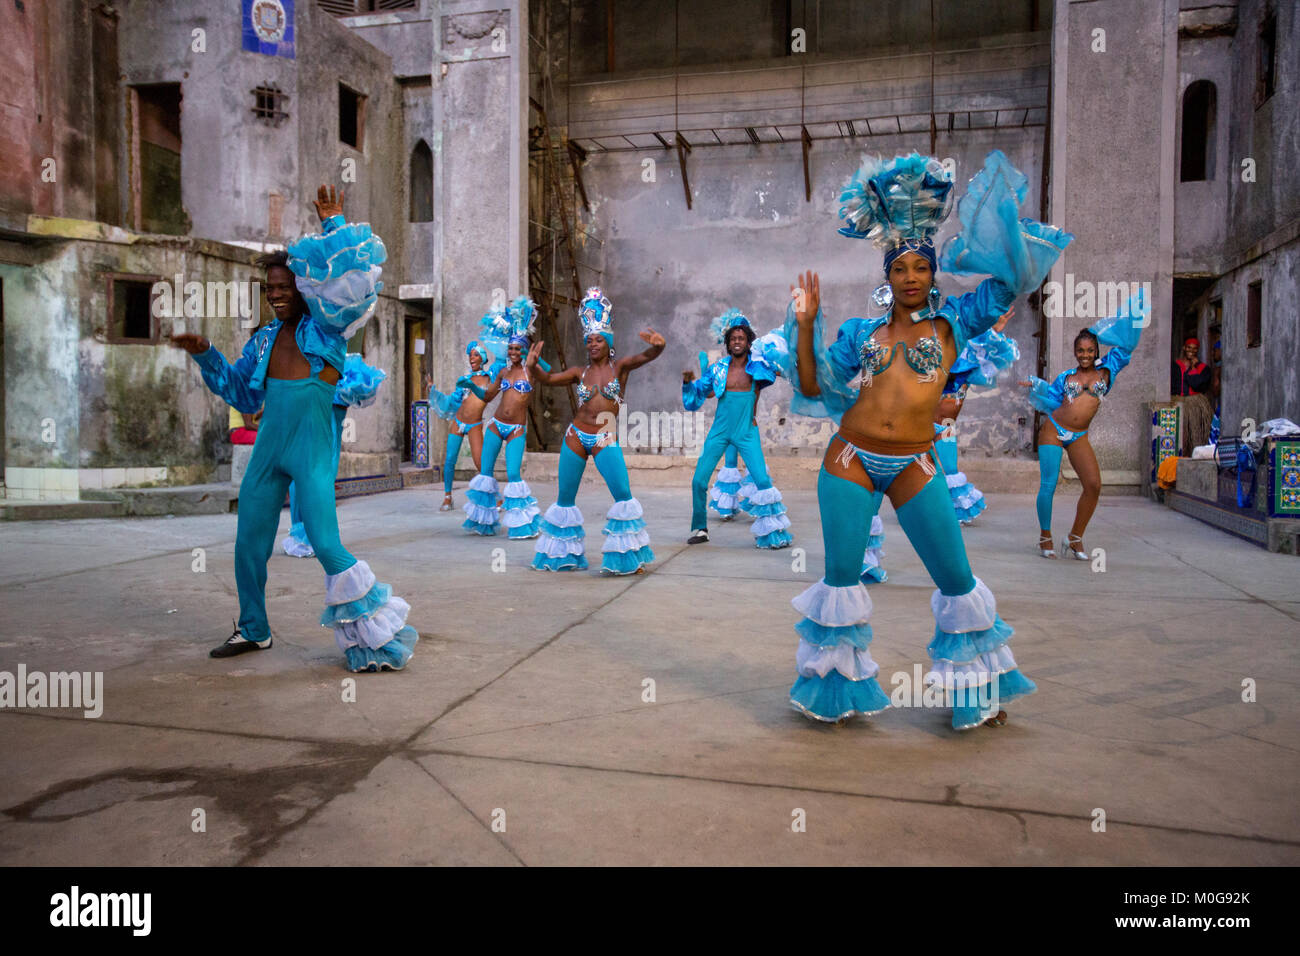 Compania Folklorica dance group in Havana, Cuba Stock Photo